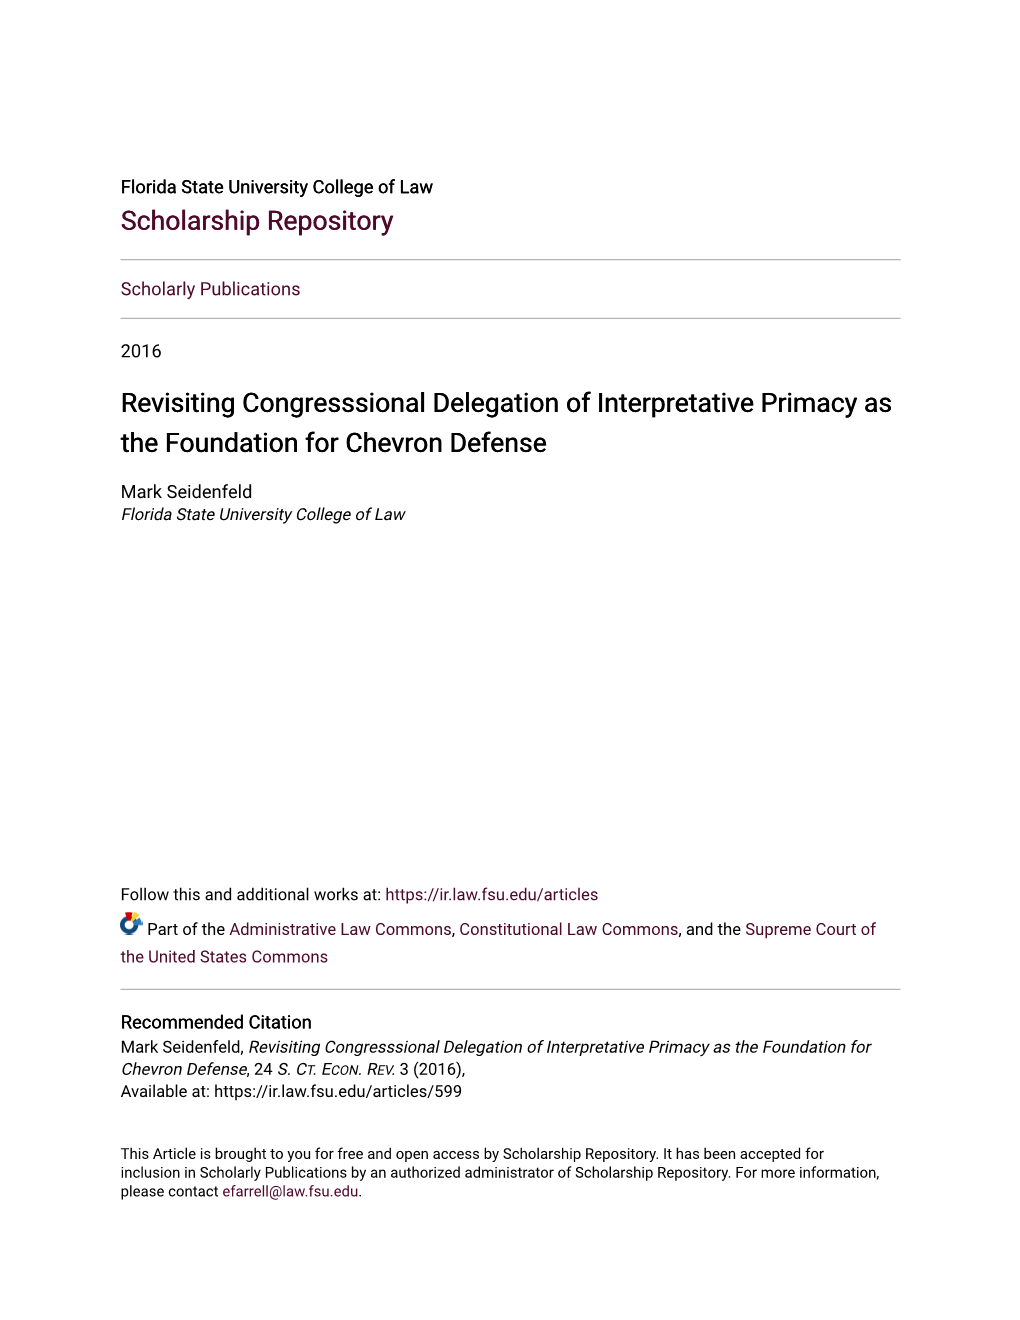 Revisiting Congresssional Delegation of Interpretative Primacy As the Foundation for Chevron Defense